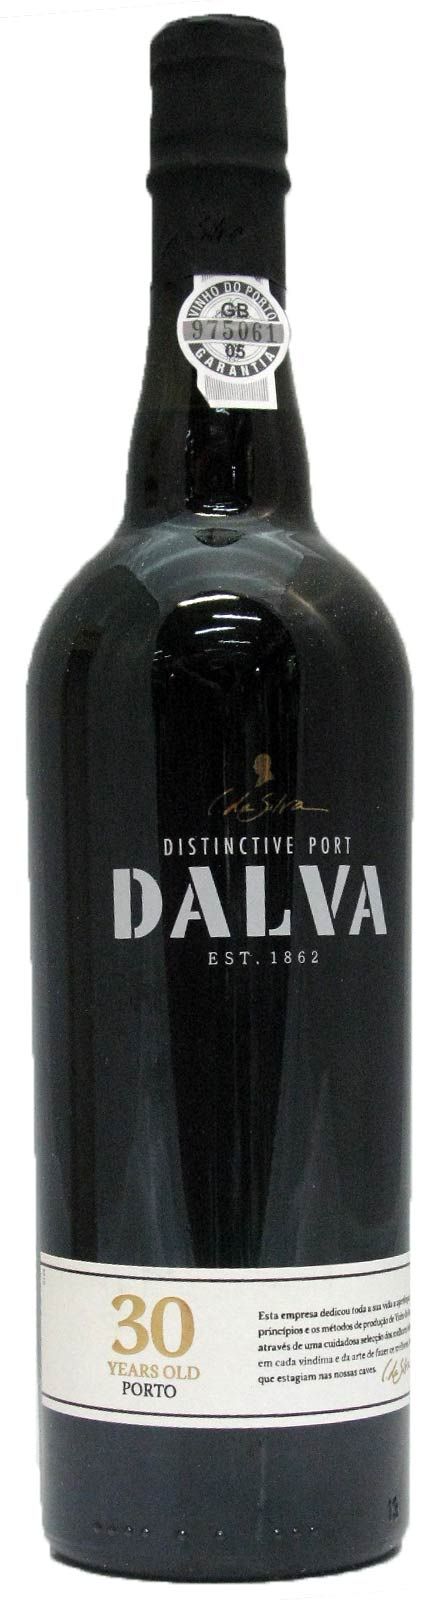 Wine Vins Dalva Porto 30 Anos